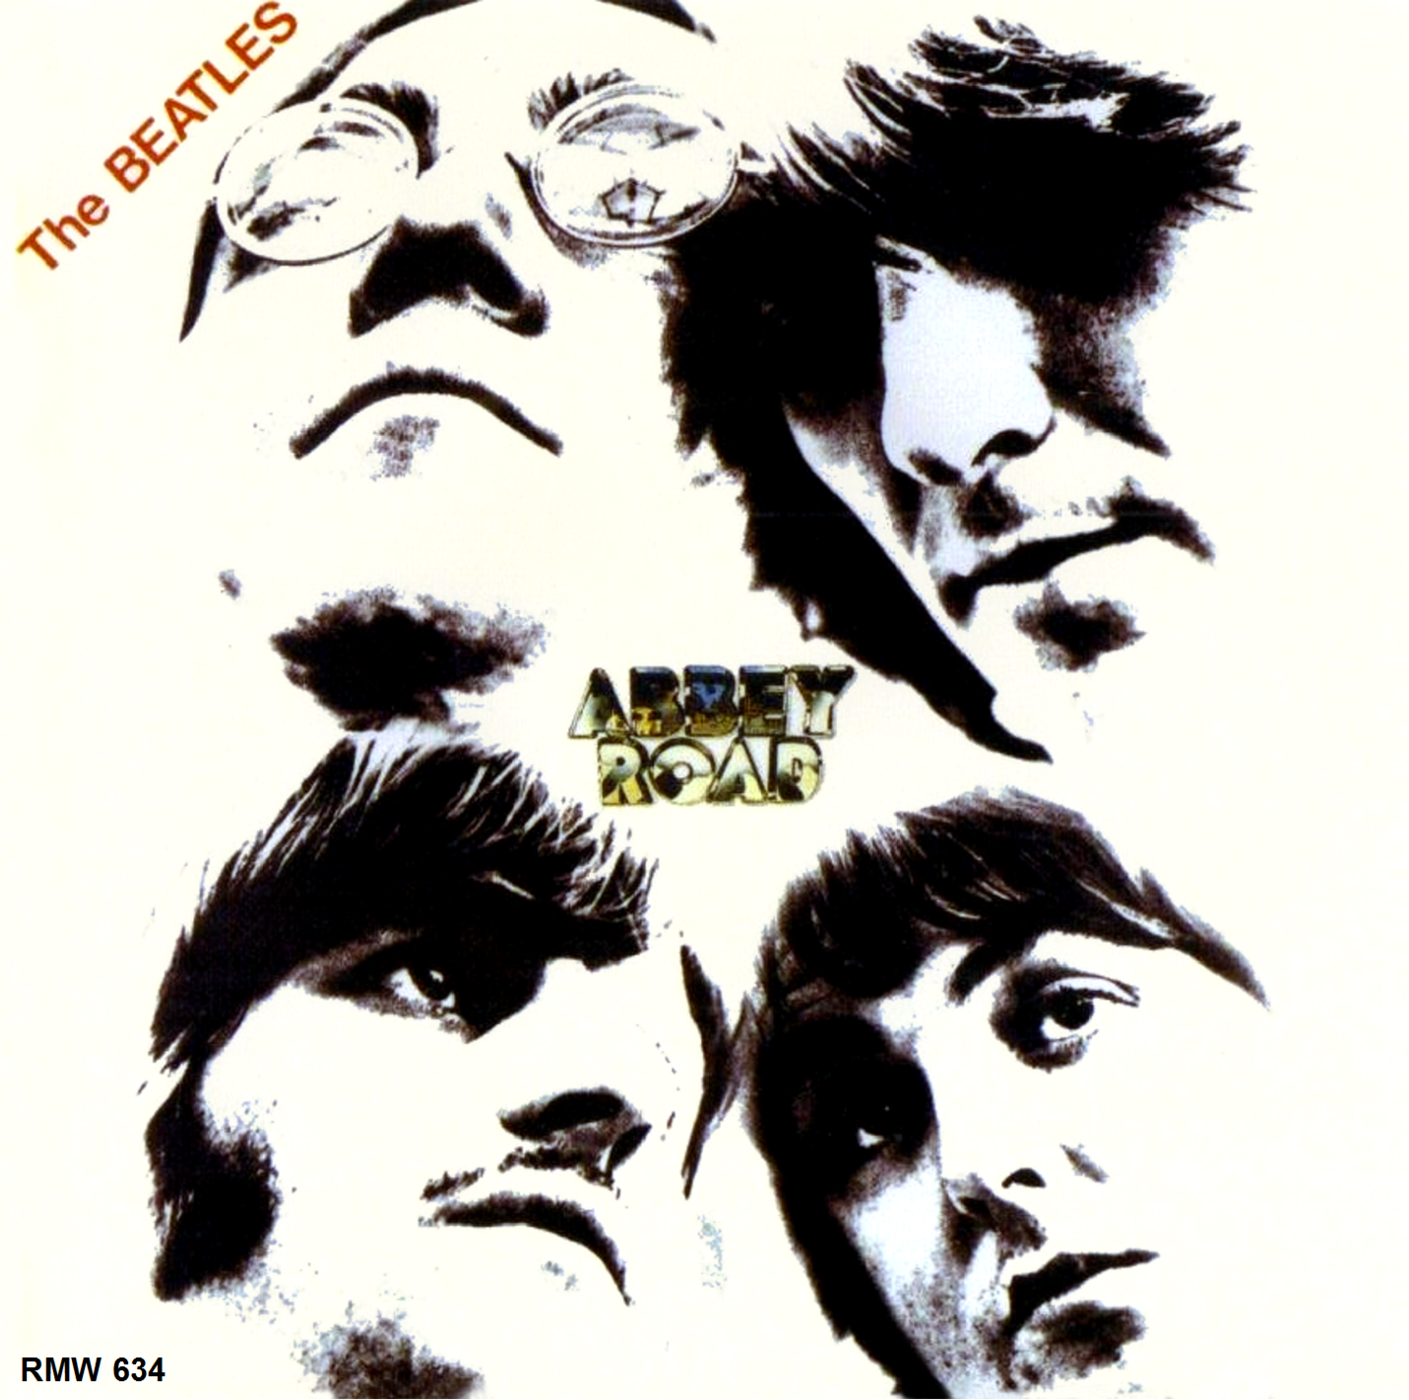 The Beatles 21 Flac - opnary